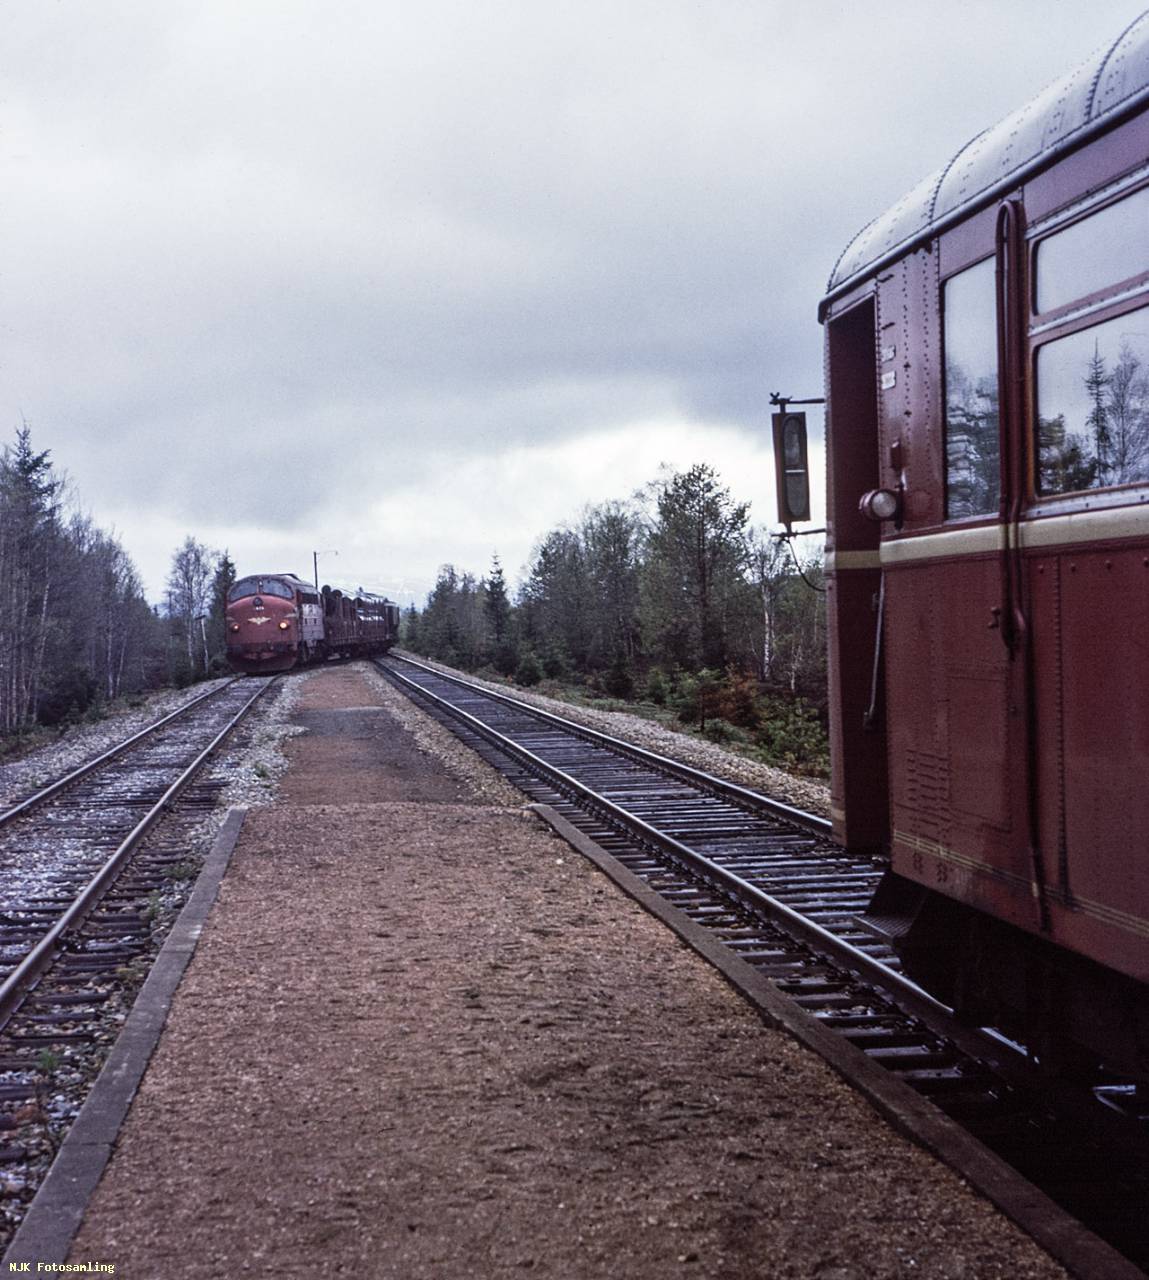 https://pix.njk.no/205/205132-Nordlandsbanen-kryssingAgle-1977-06-03_1280-fotoEWJohansson.jpg